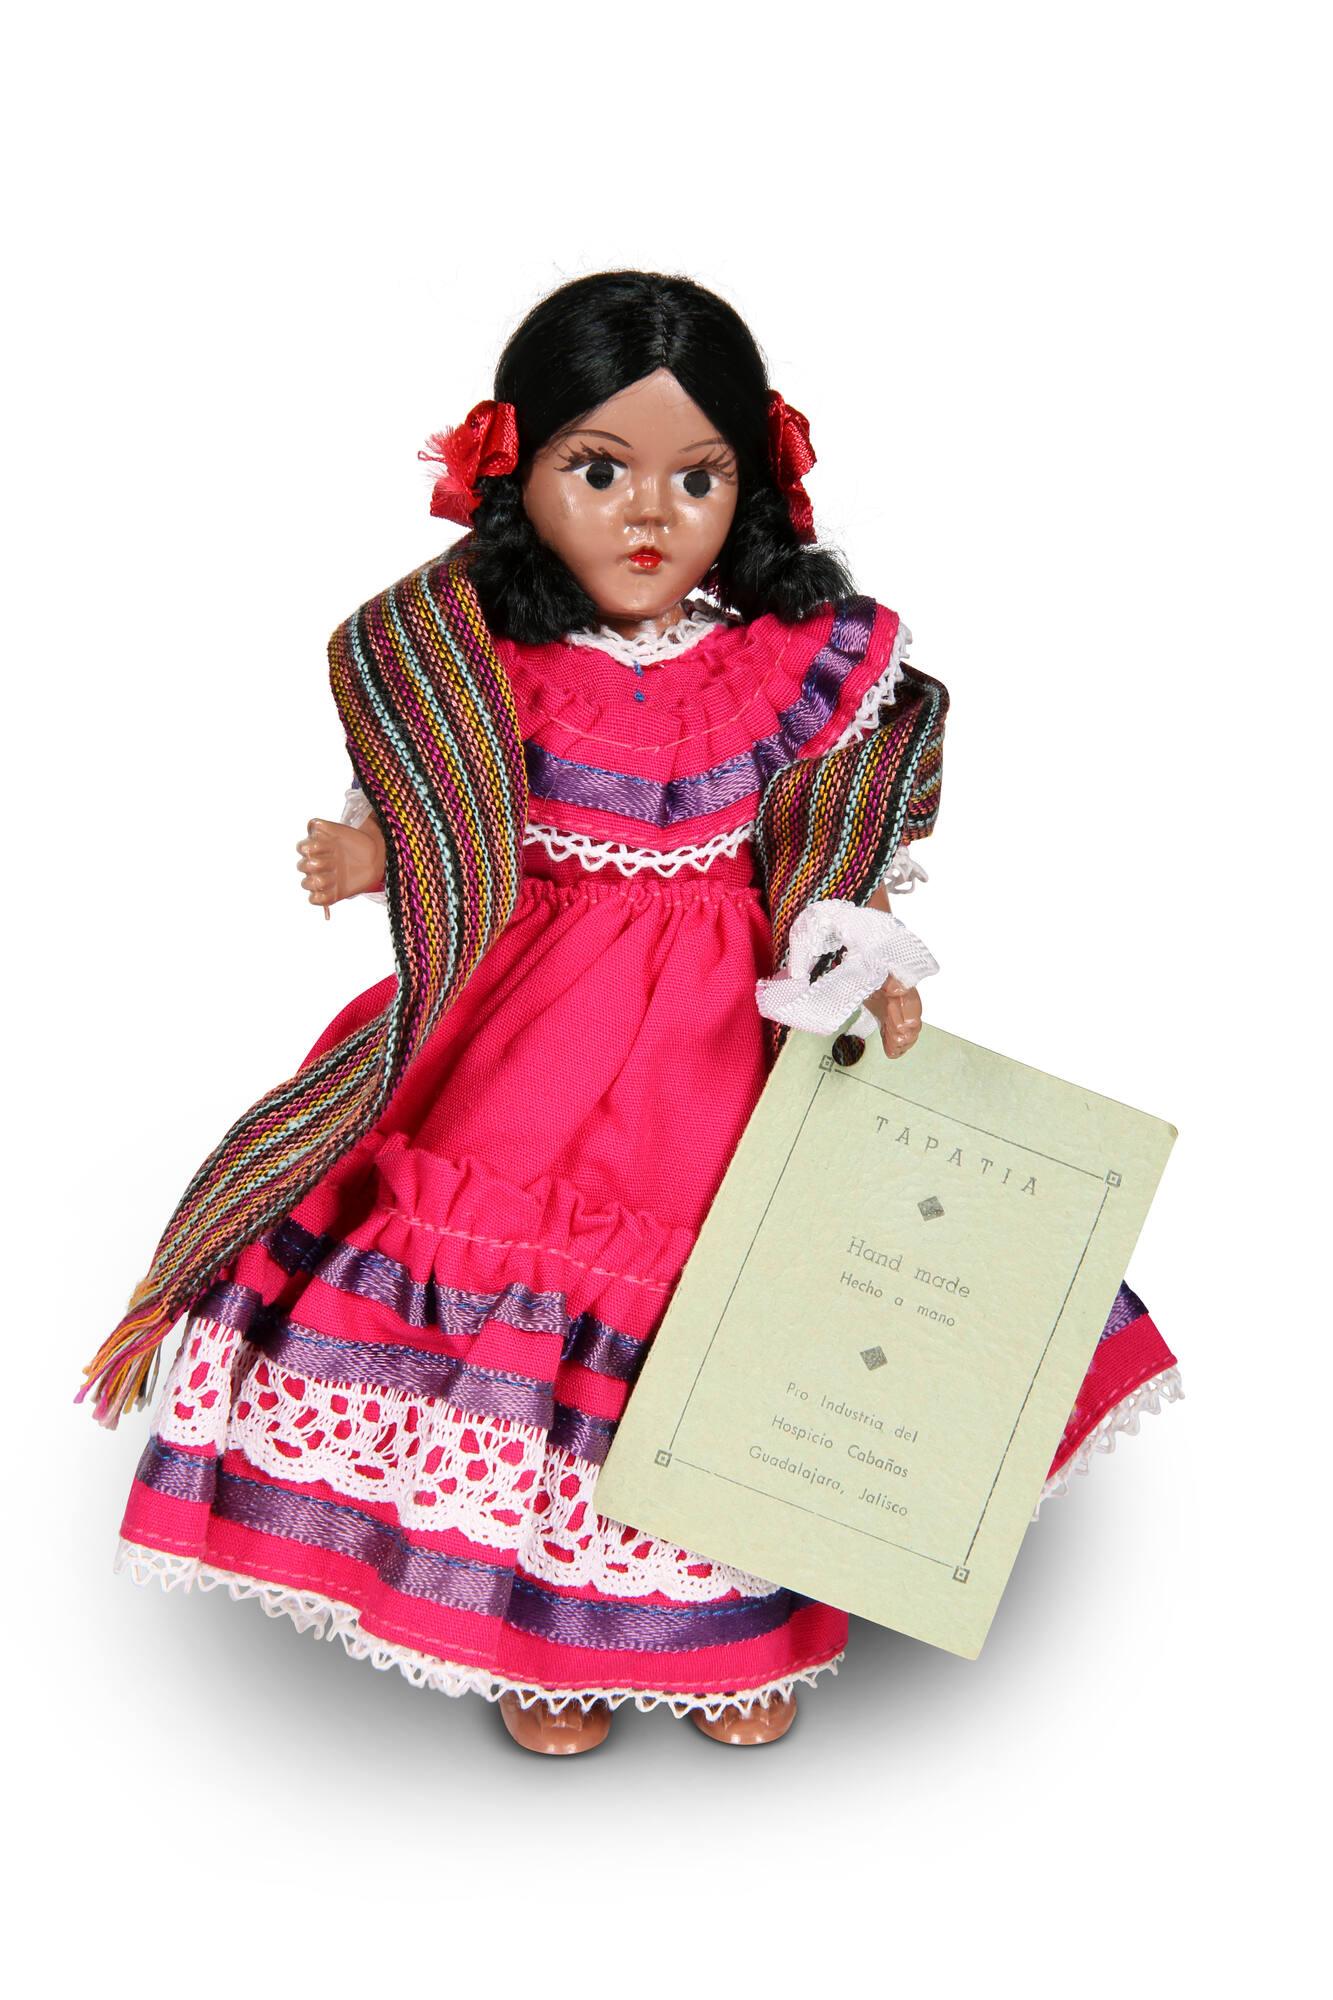 purses and handbags, colorful, cartoon printed imag, Mexican doll